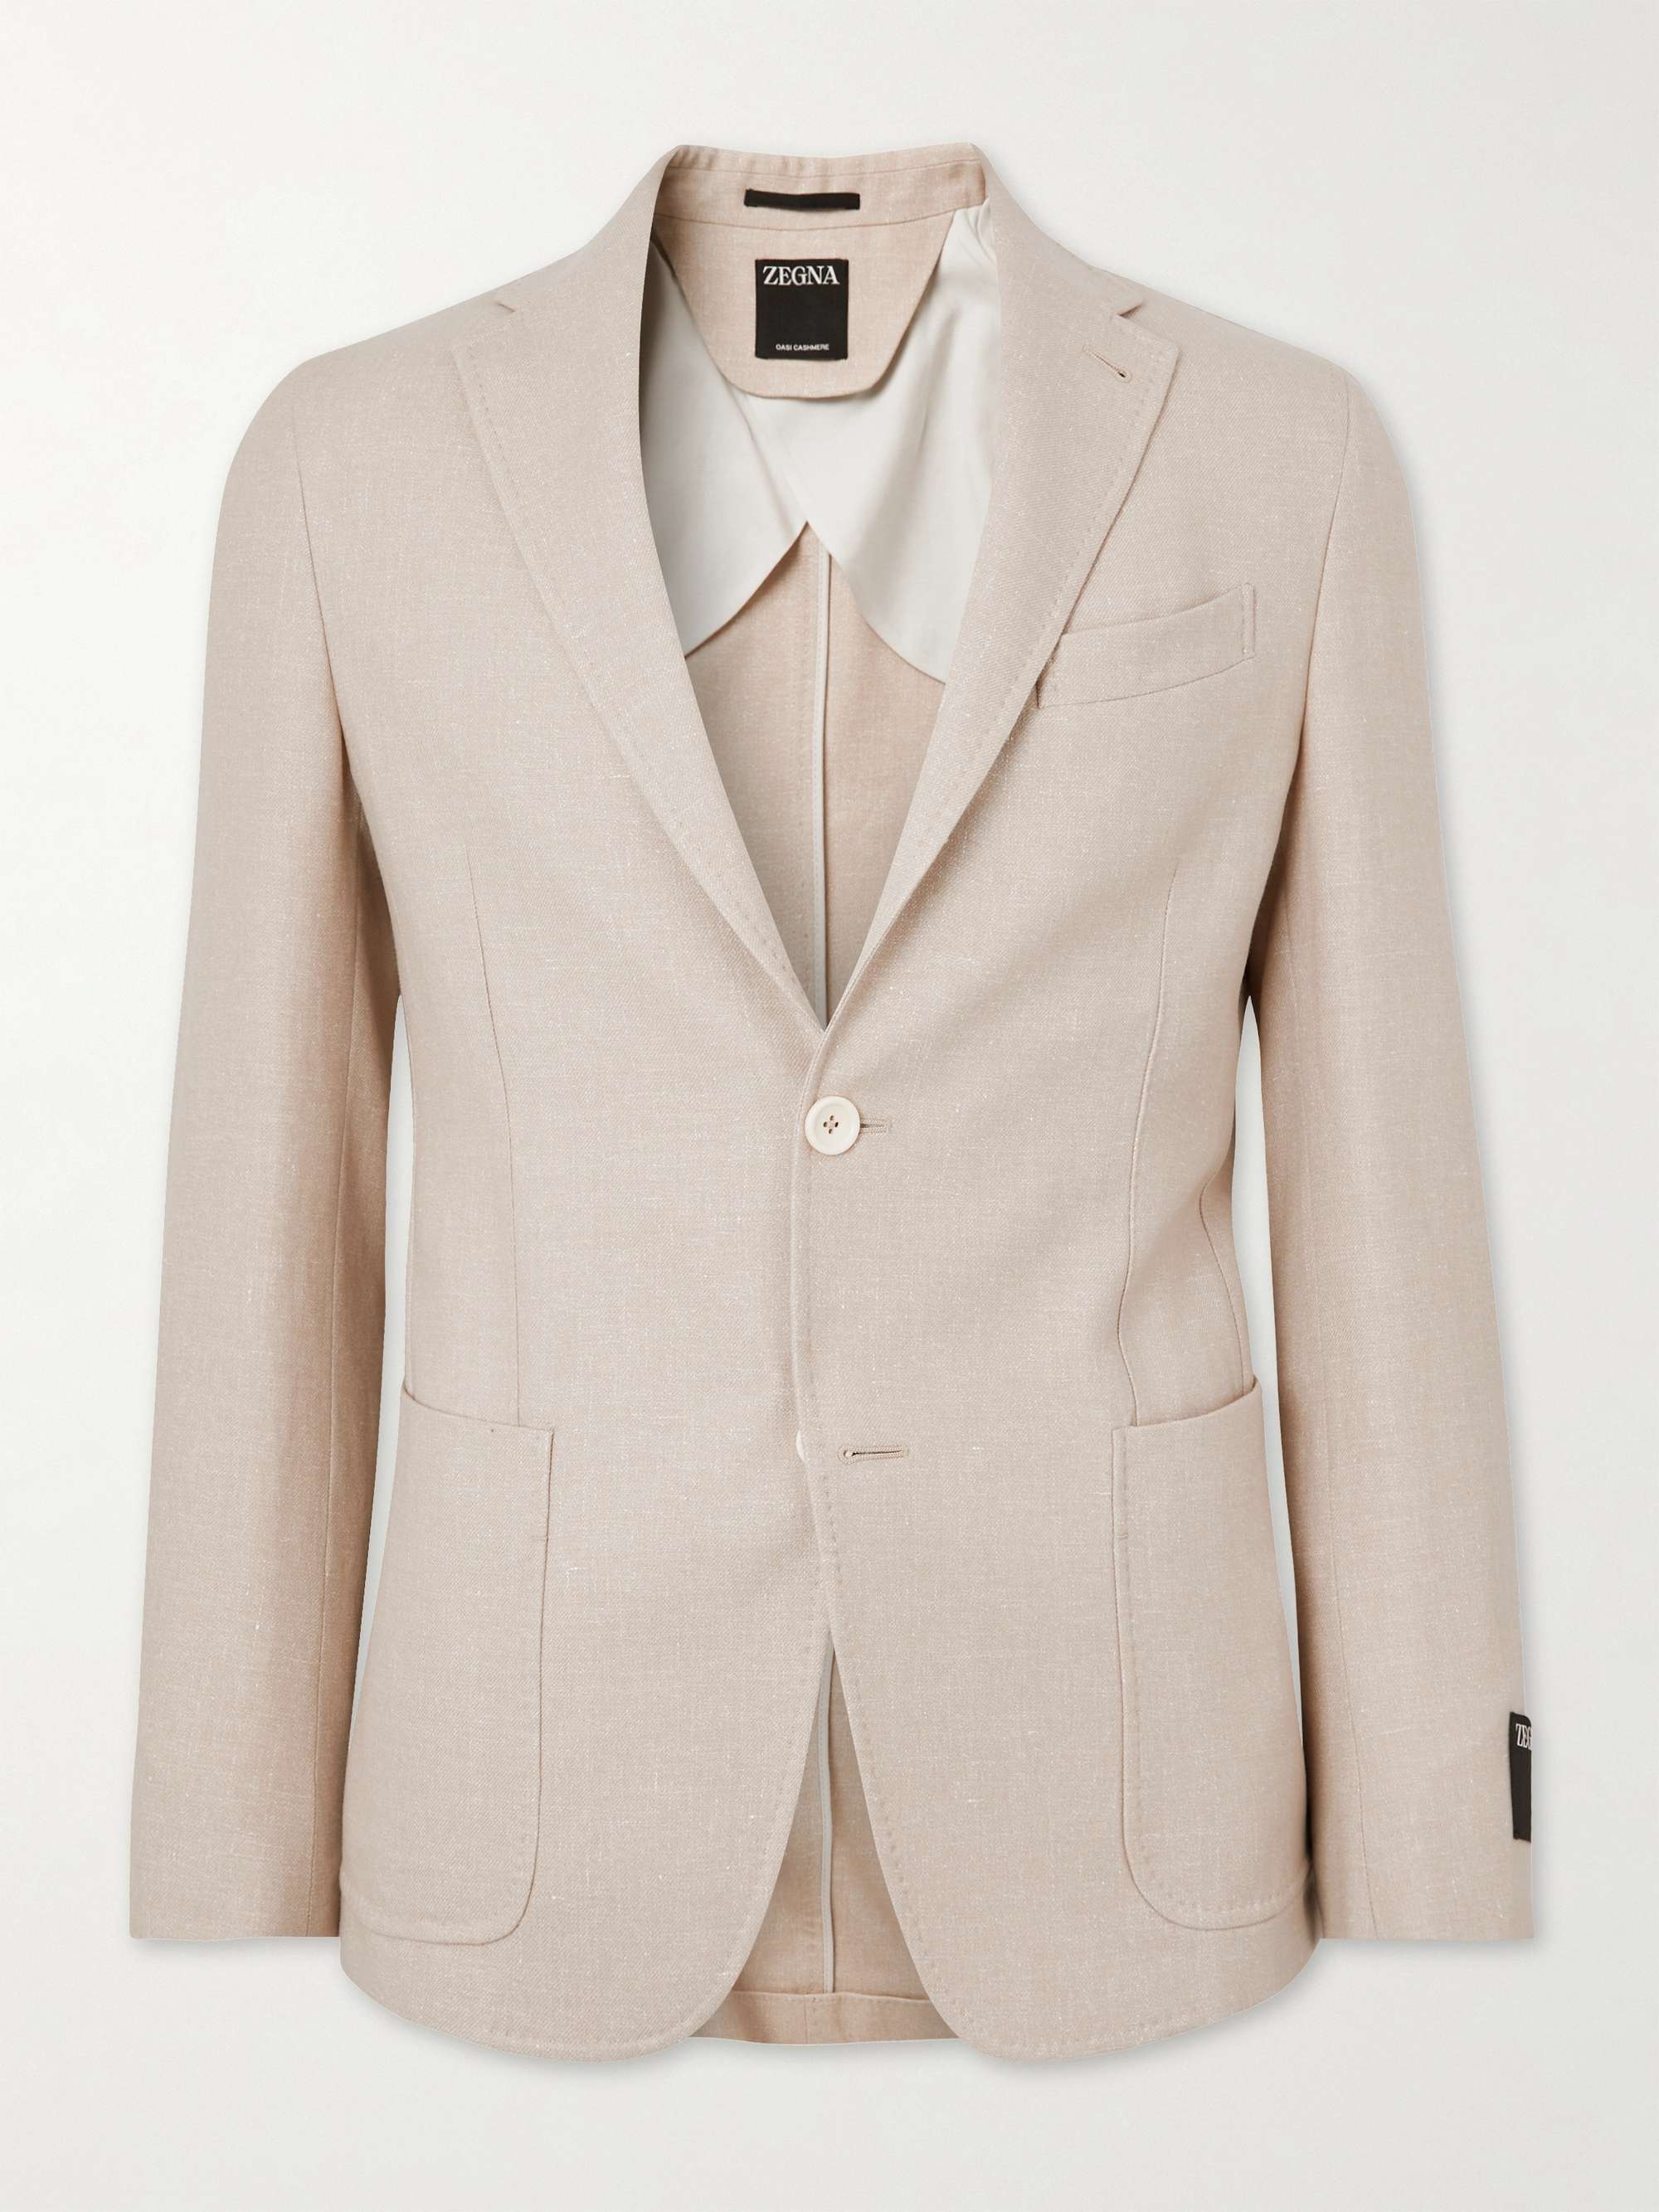 ZEGNA Oasi Cashmere and Cotton-Blend Blazer for Men | MR PORTER